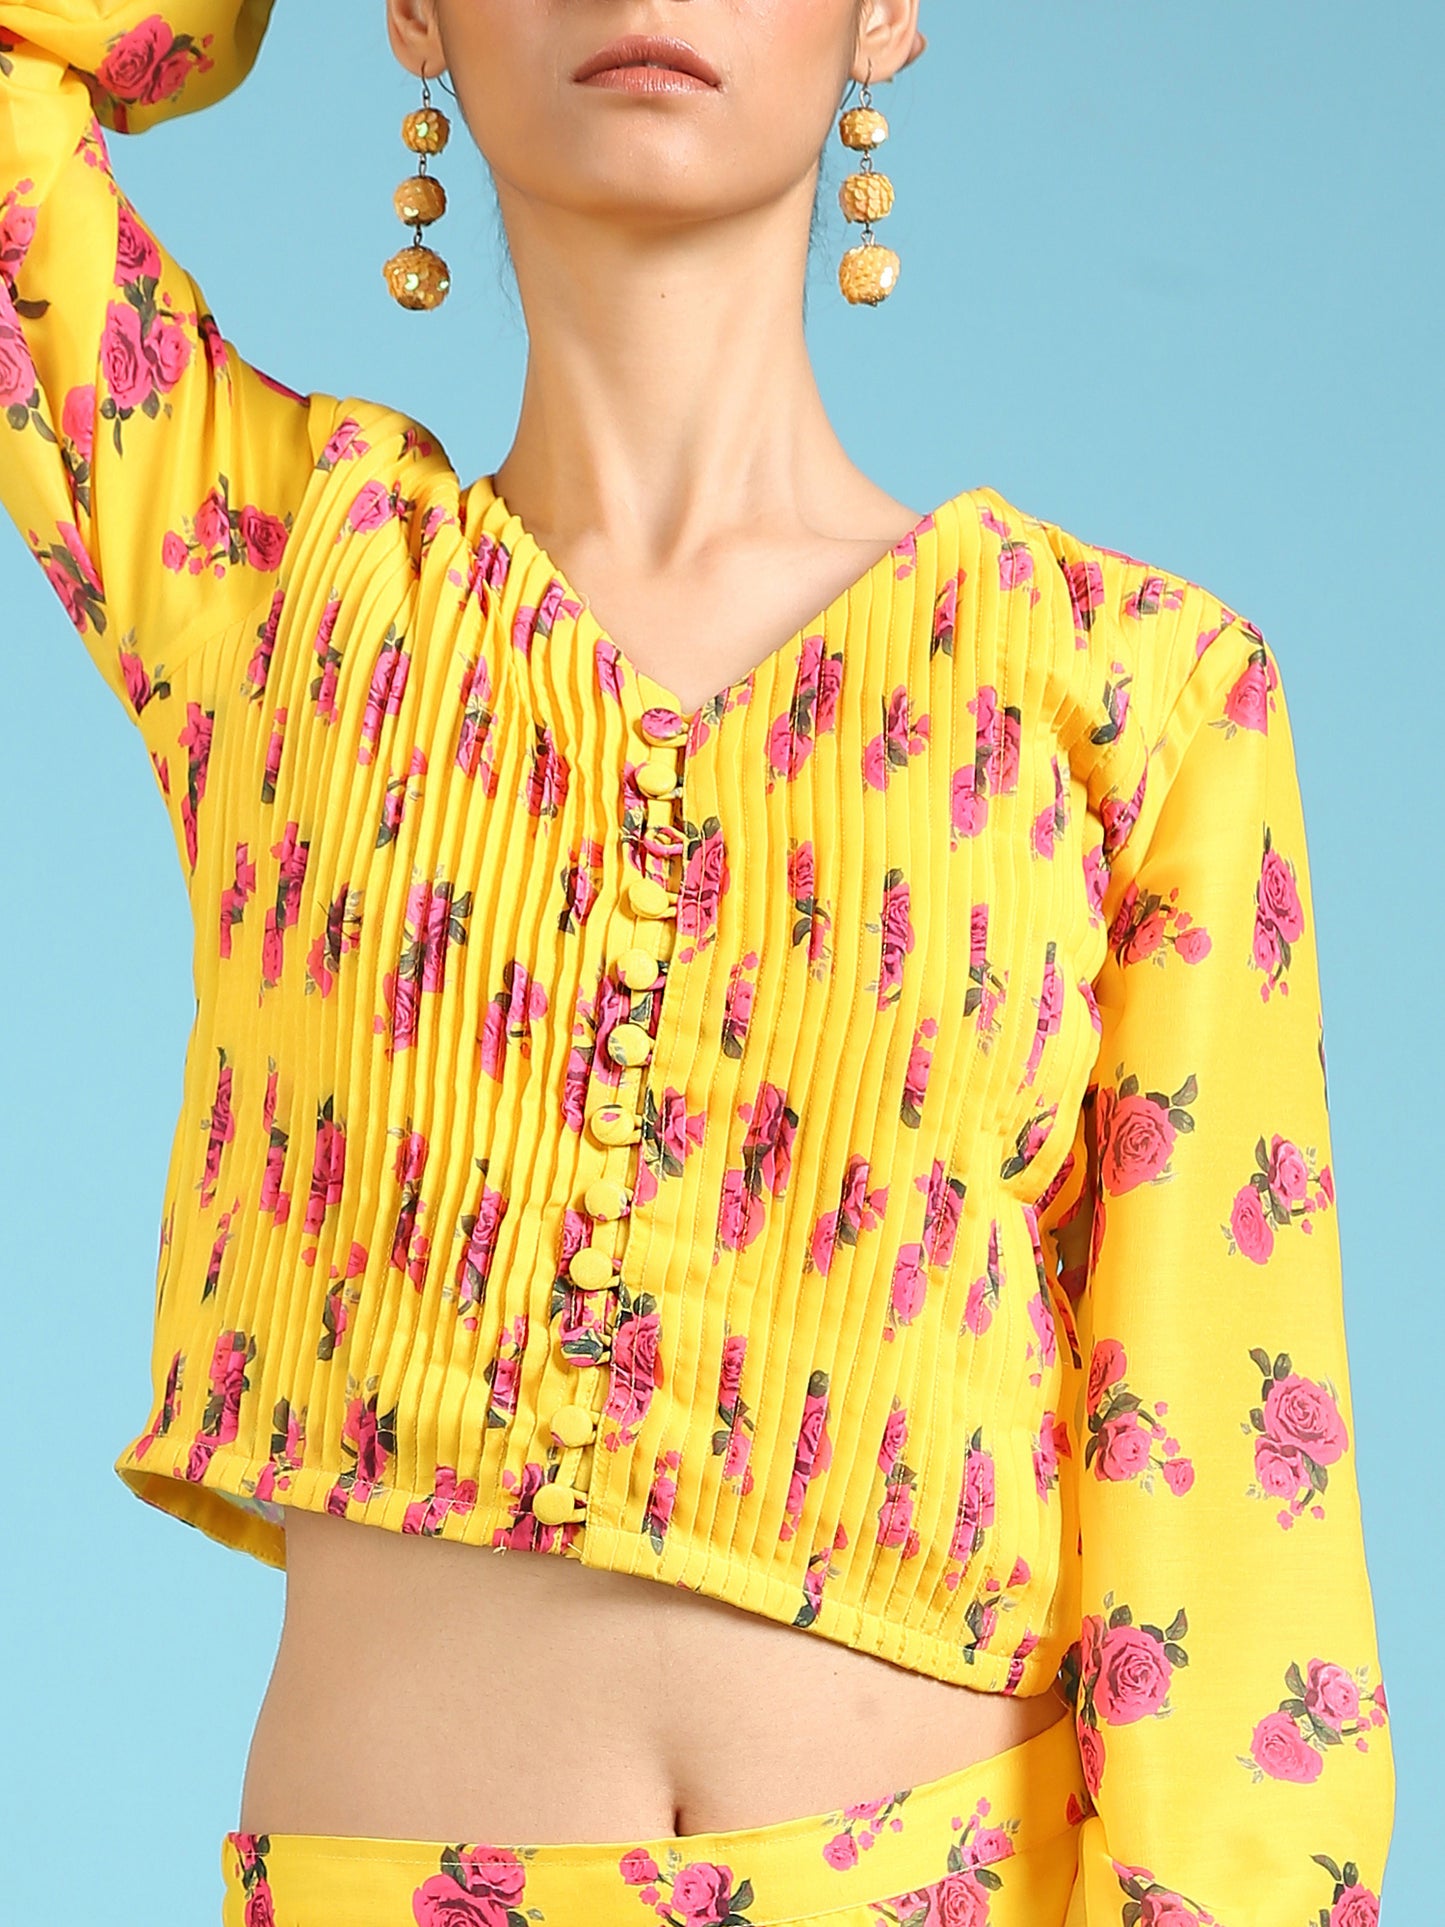 Rose Sunshine Top - Yellow Digital Printed Cotton Silk Blouson Top